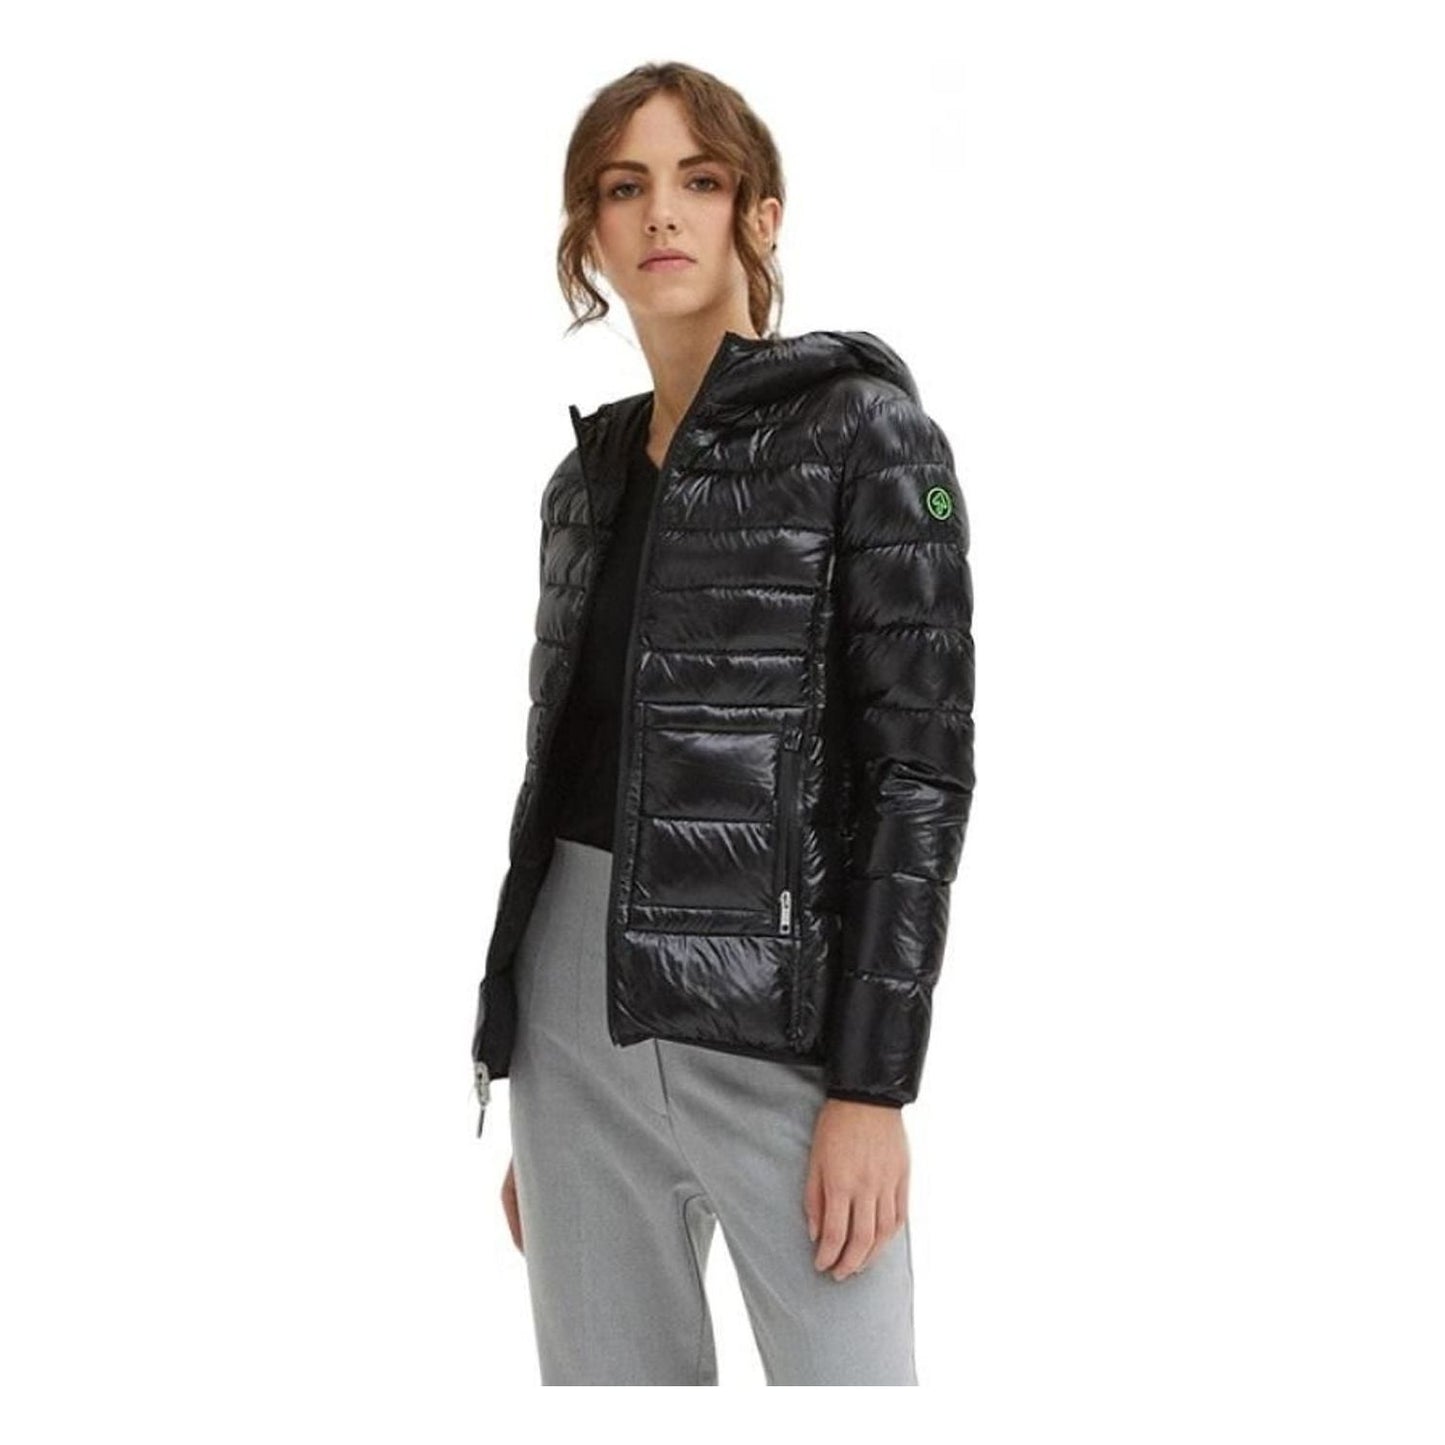 Centogrammi Ultra Light Water-Repellent Short Down Jacket black-nylon-jackets-coat-4 product-8590-628733973-bd364202-2c0.jpg